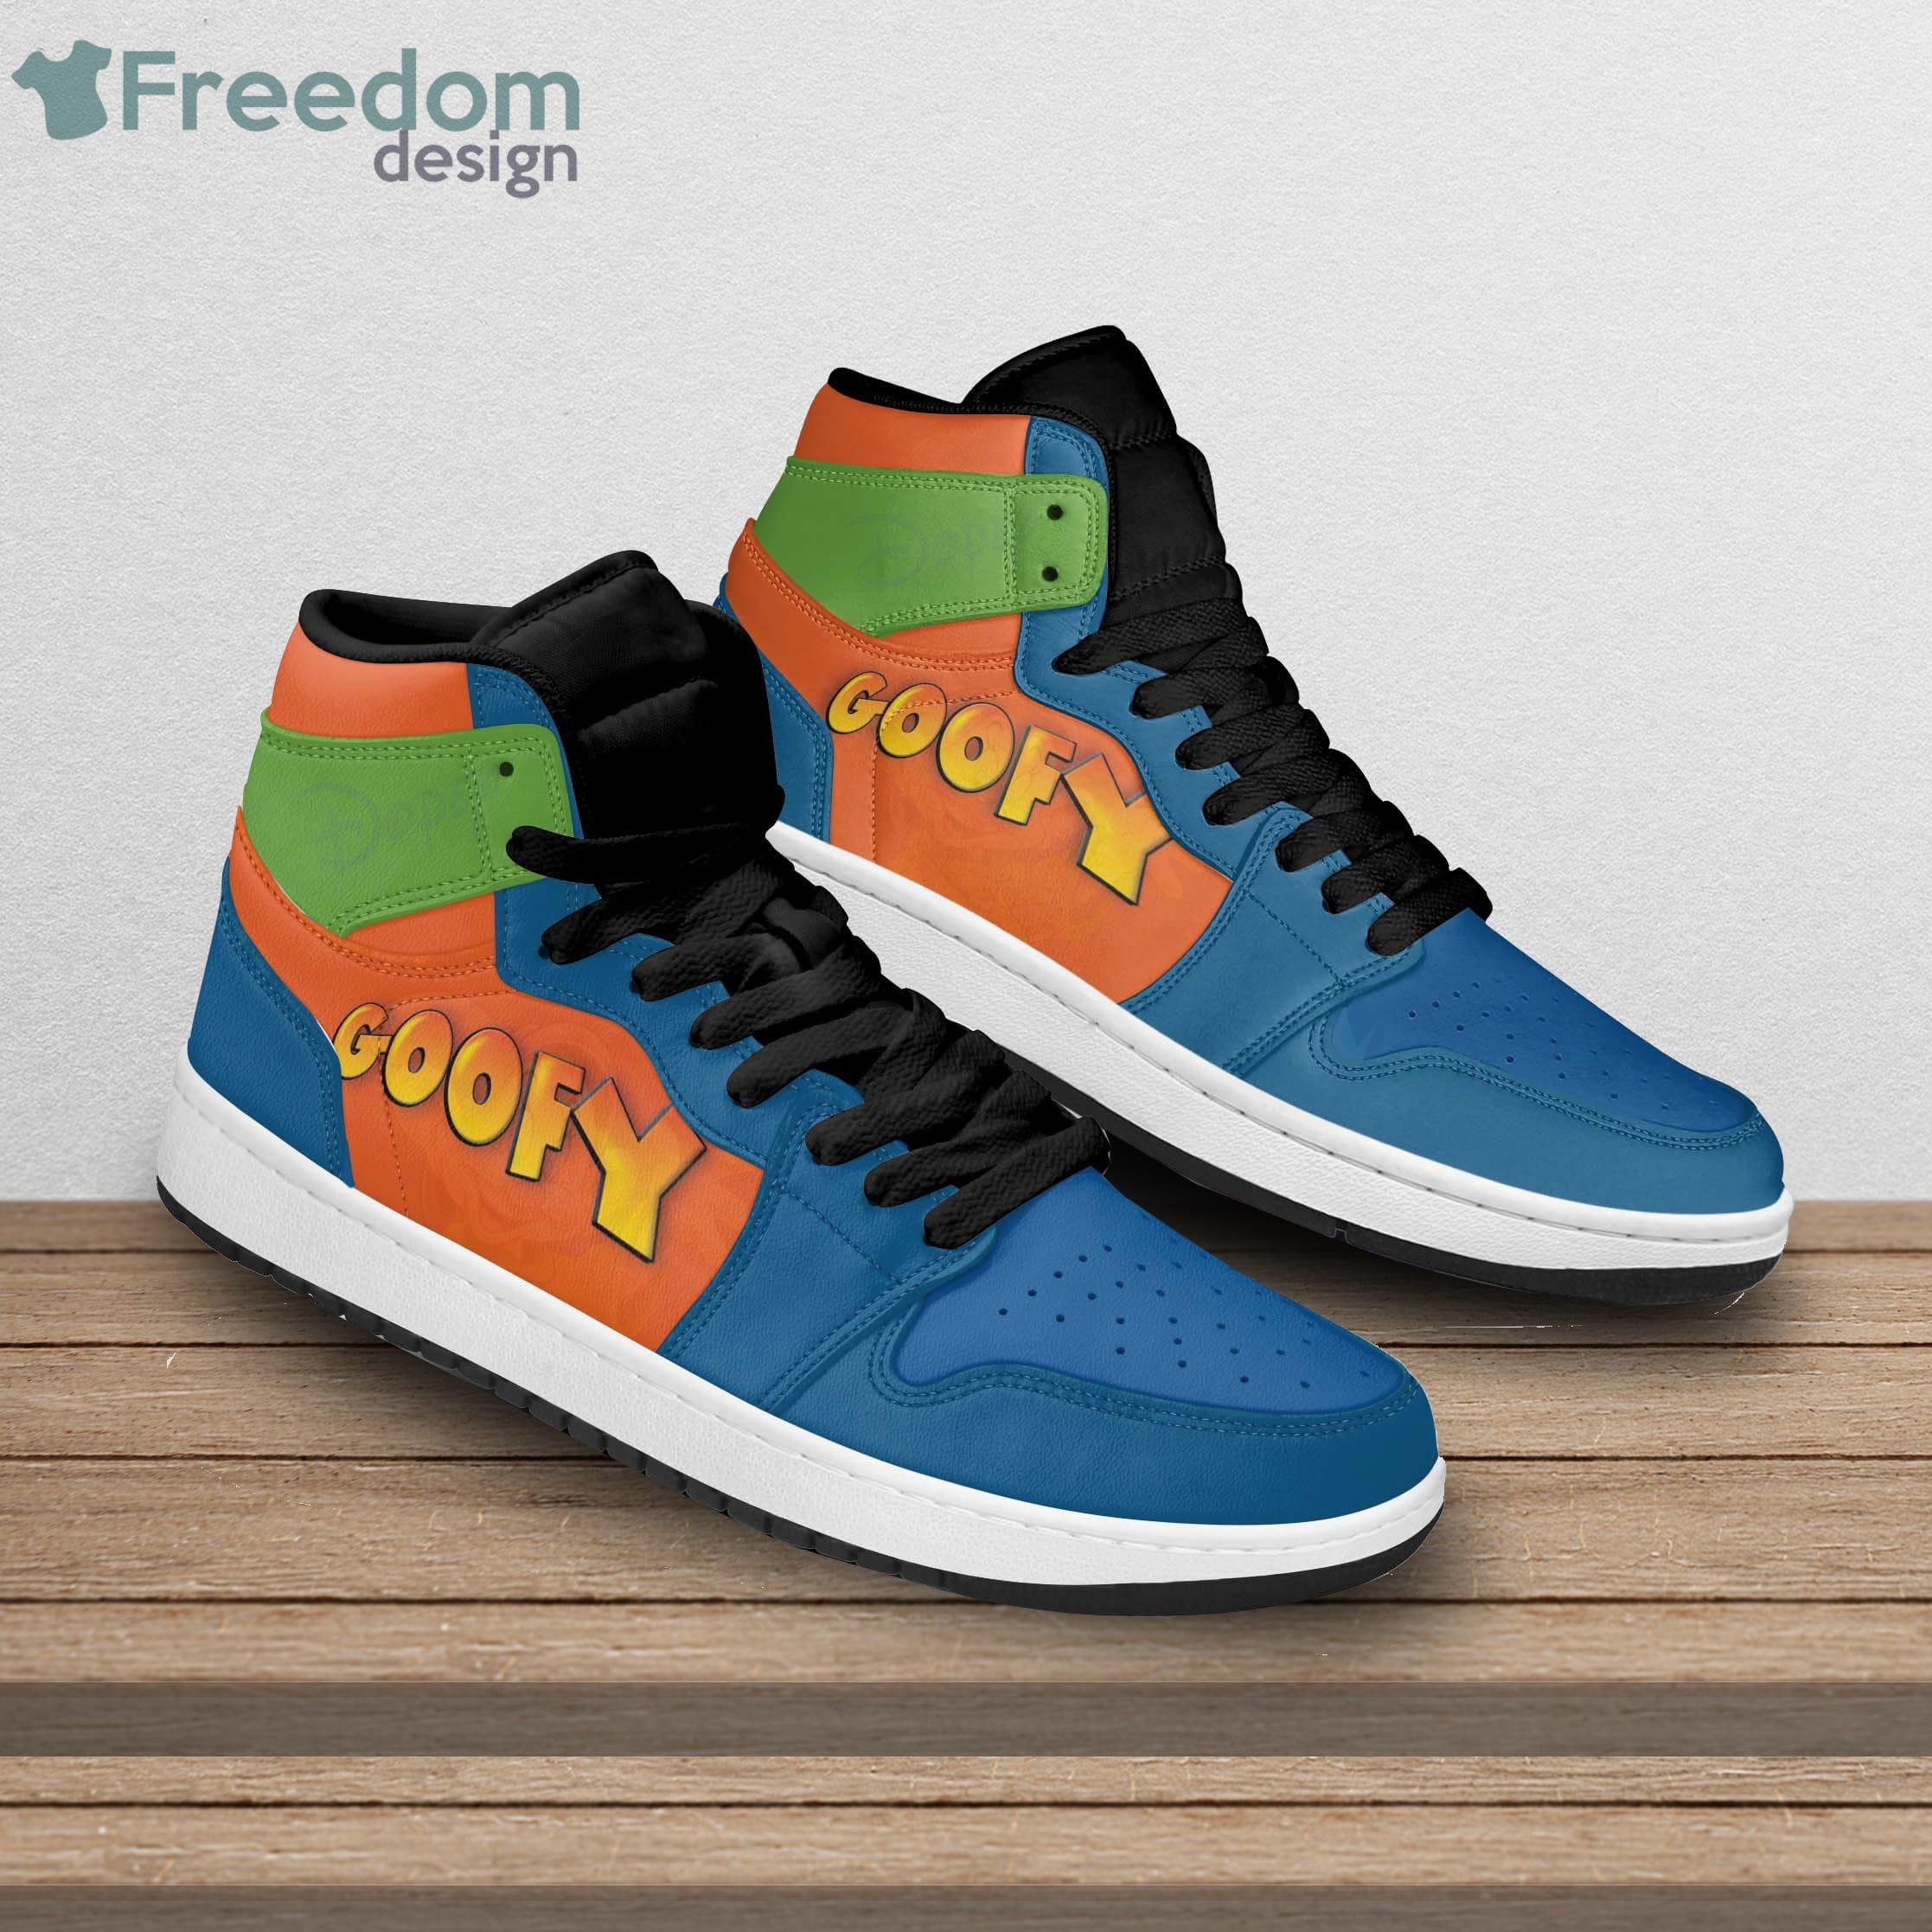 arve Ren og skær Fantasifulde Goofy Dog Orange Blue Green Colorblock Disney Cartoon Sneakers Boots Air  Jordan Hightop Shoes - Freedomdesign